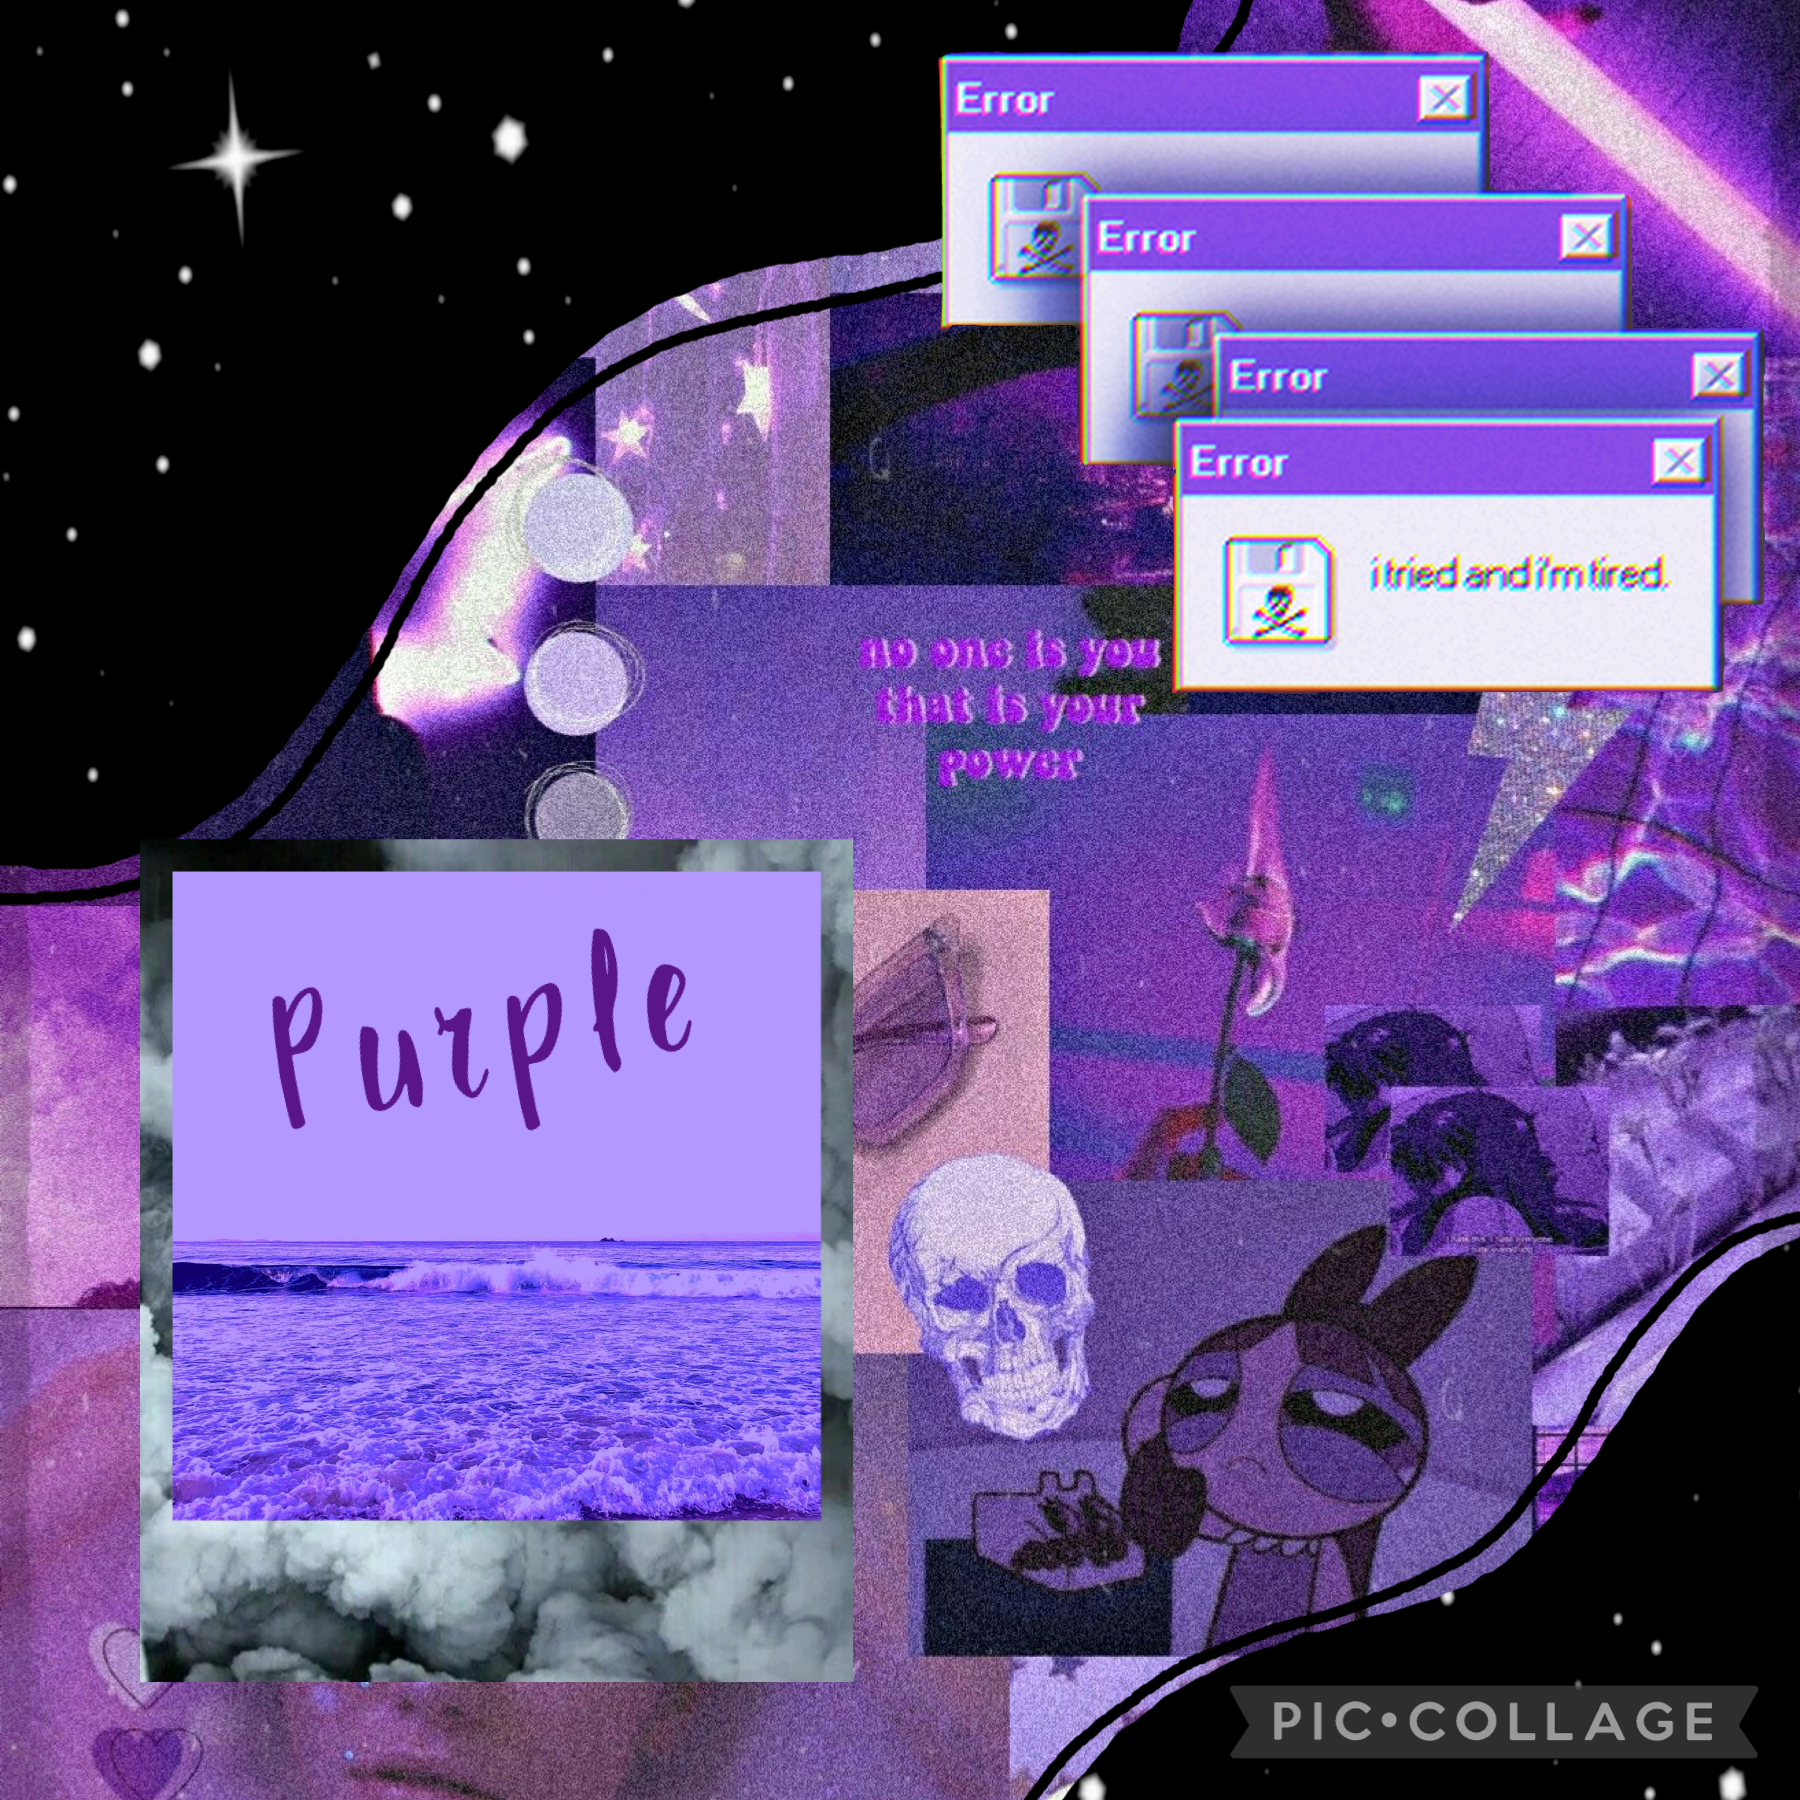 Purpleeeeee